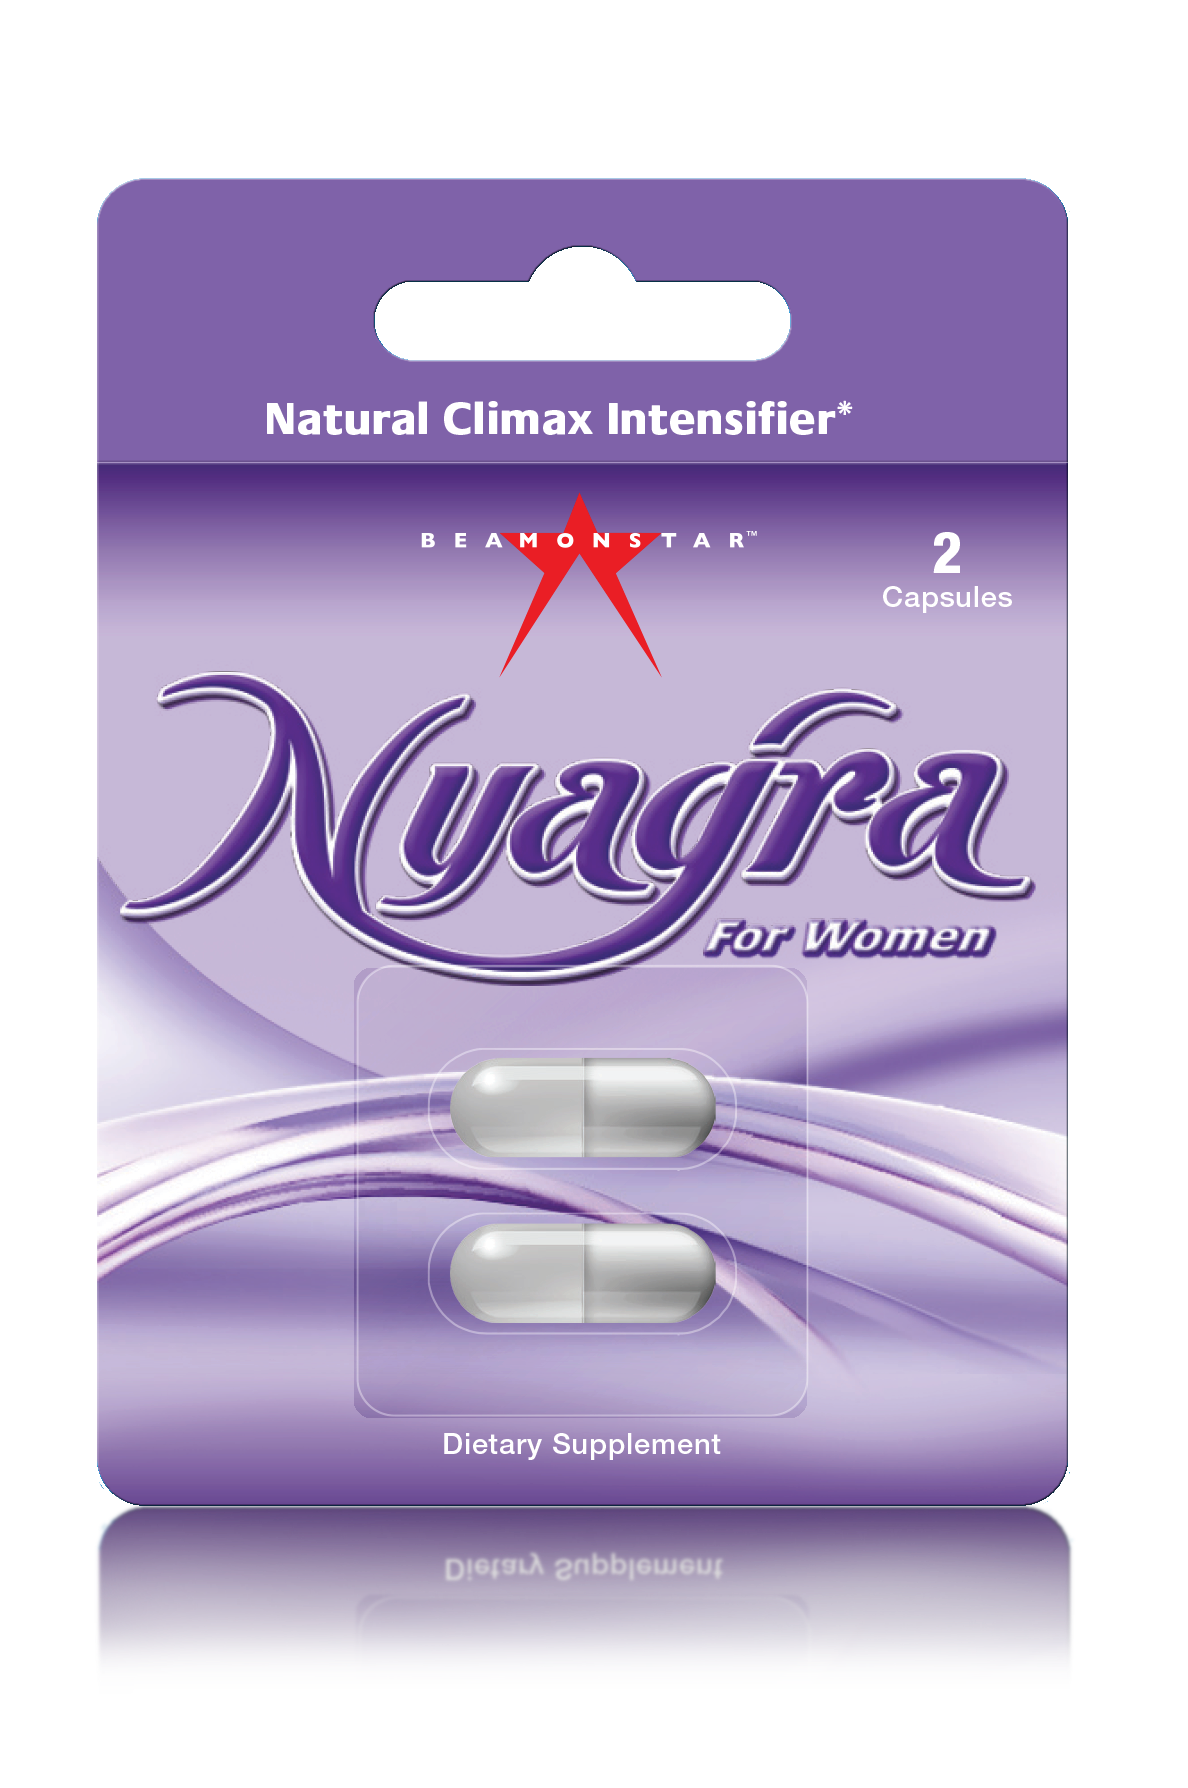 Nyagra Female Climax Intensifier